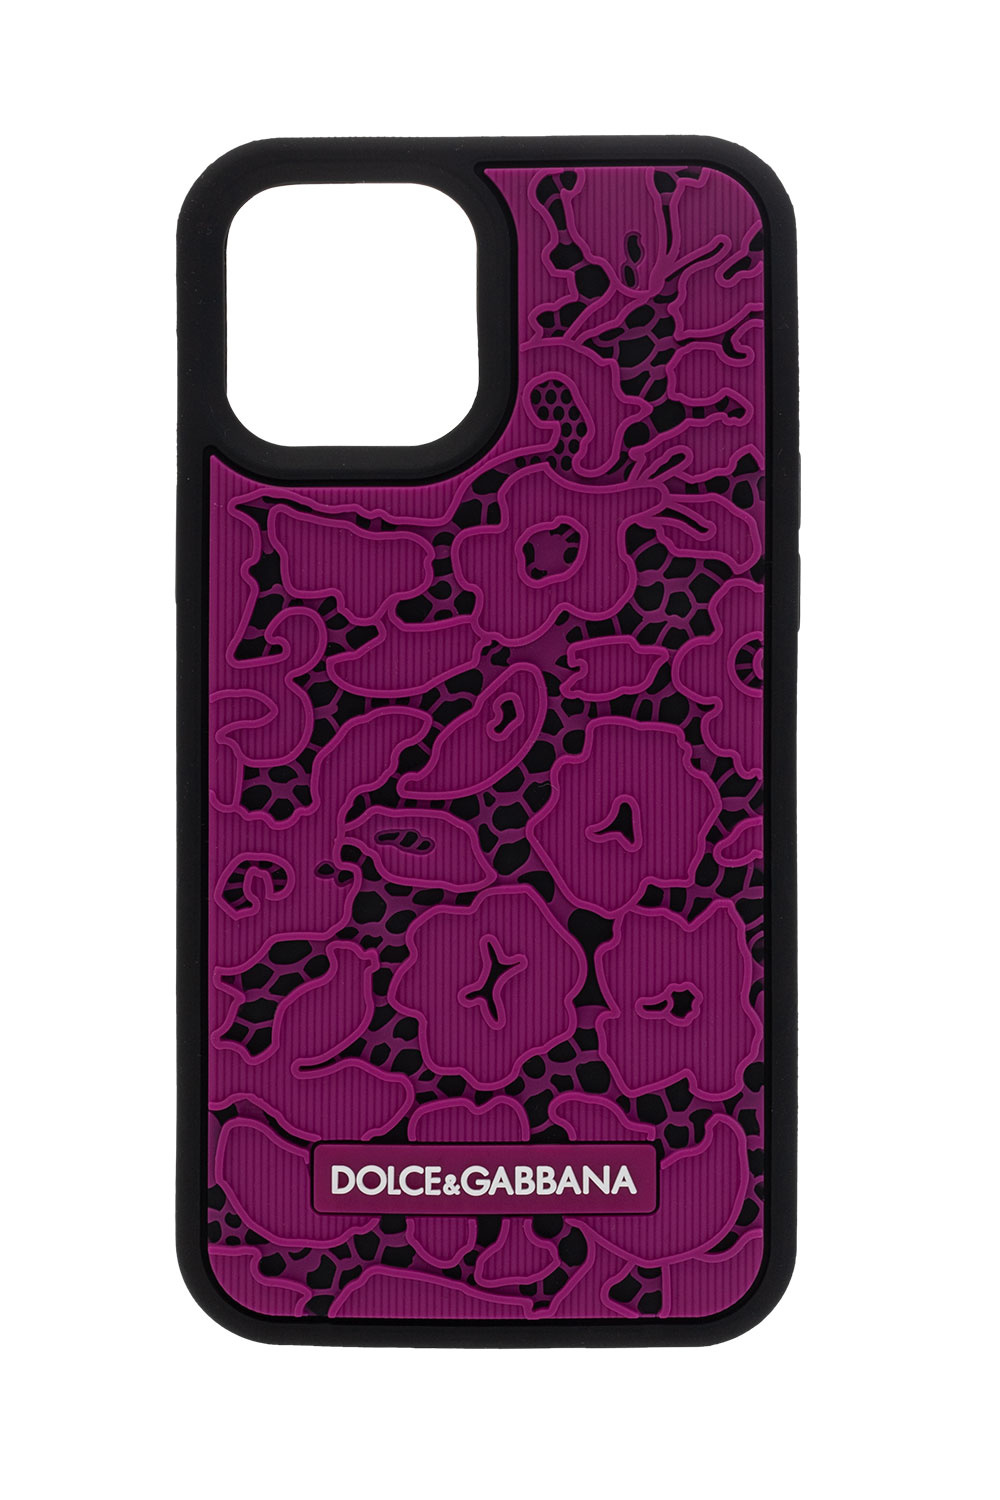 IetpShops Germany - iPhone 12 Pro Max case Dolce & Gabbana - dolce gabbana  logo leather crossbody bag